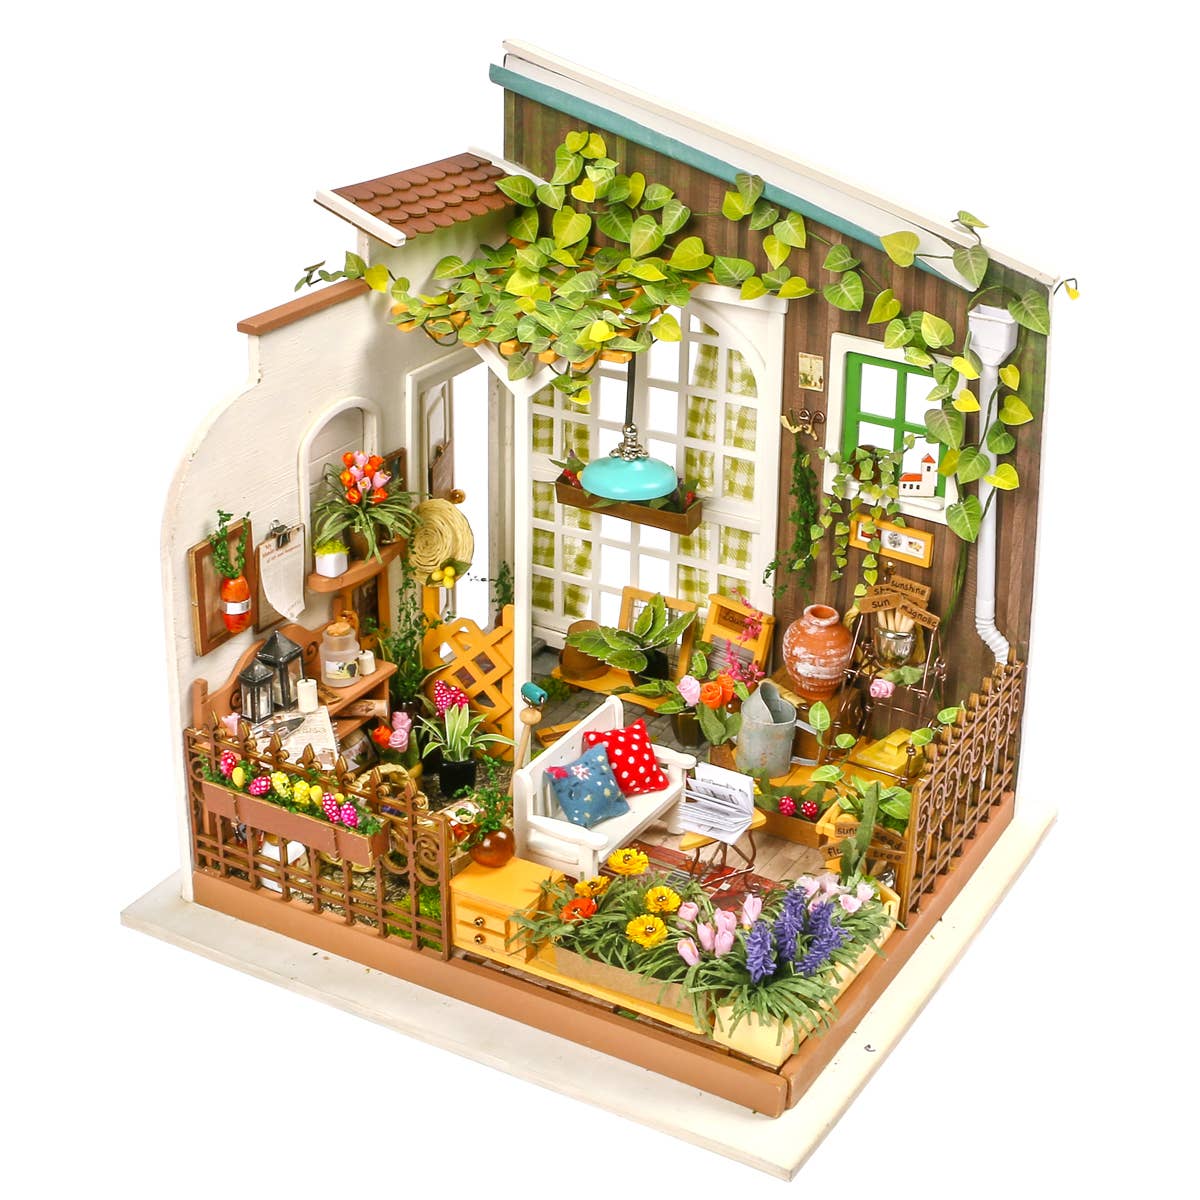 DIY Miniature House Kit: Miller's Garden